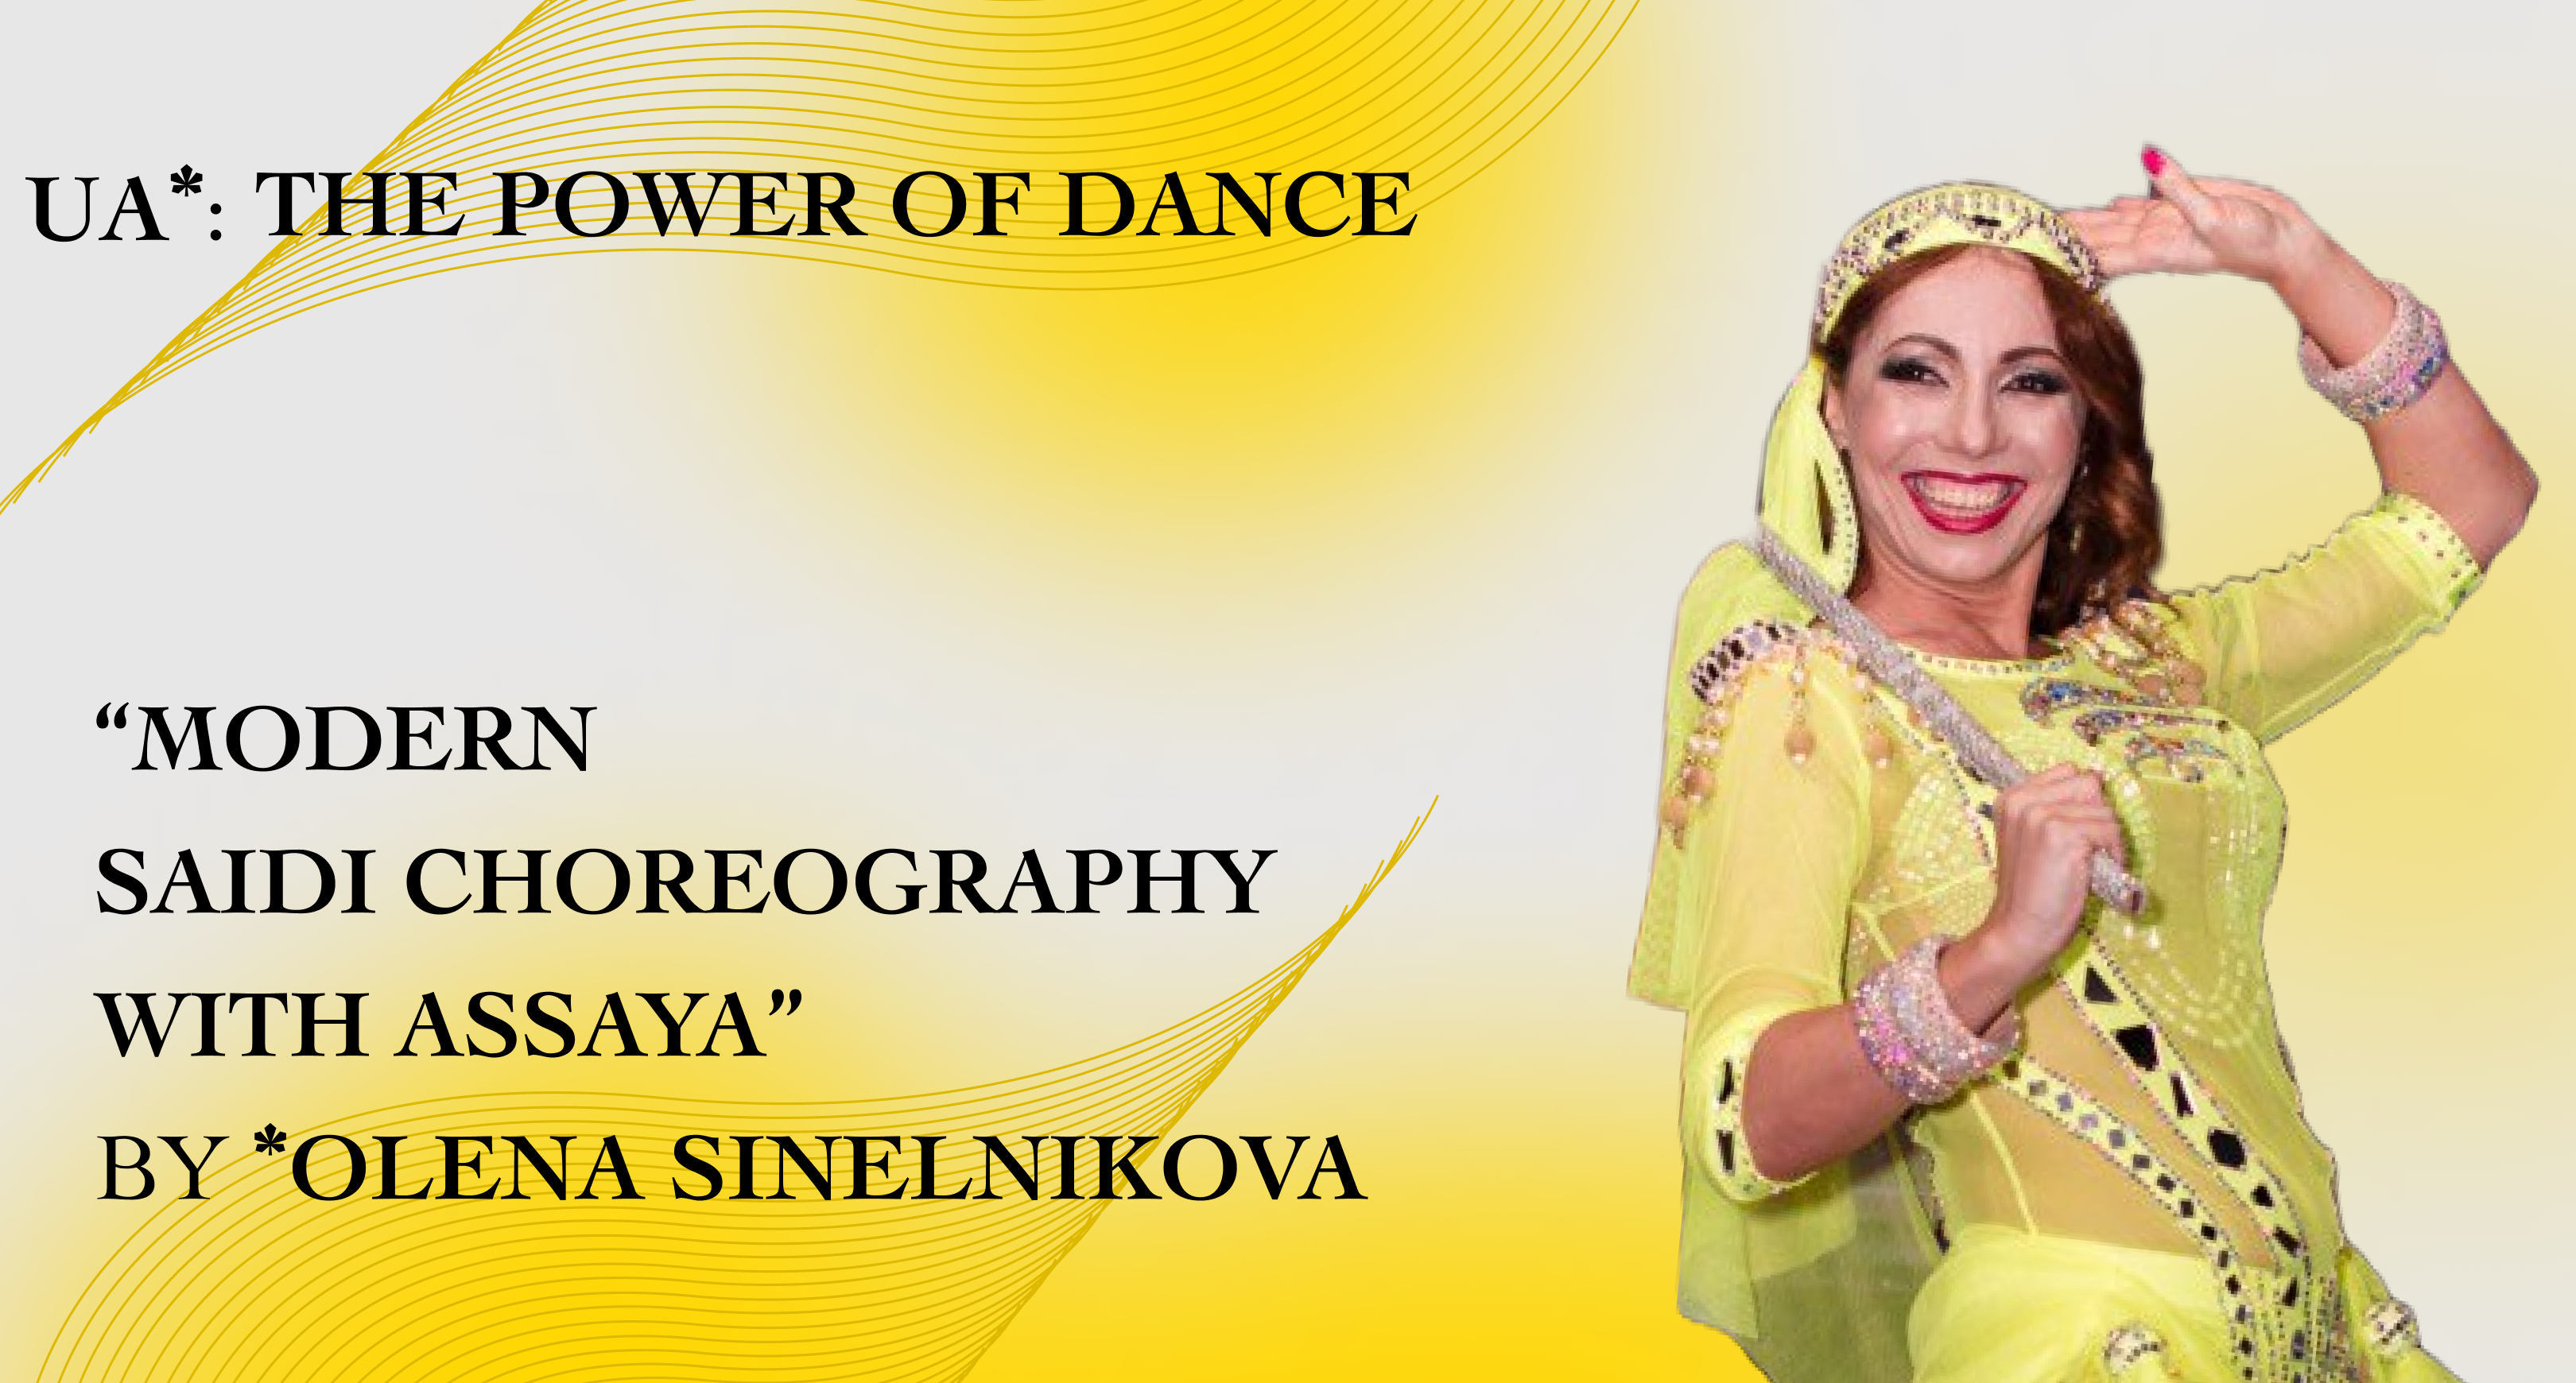 UA*: THE POWER OF DANCE: “Modern Saidi choreography with assaya” by Olena Sinelnikova